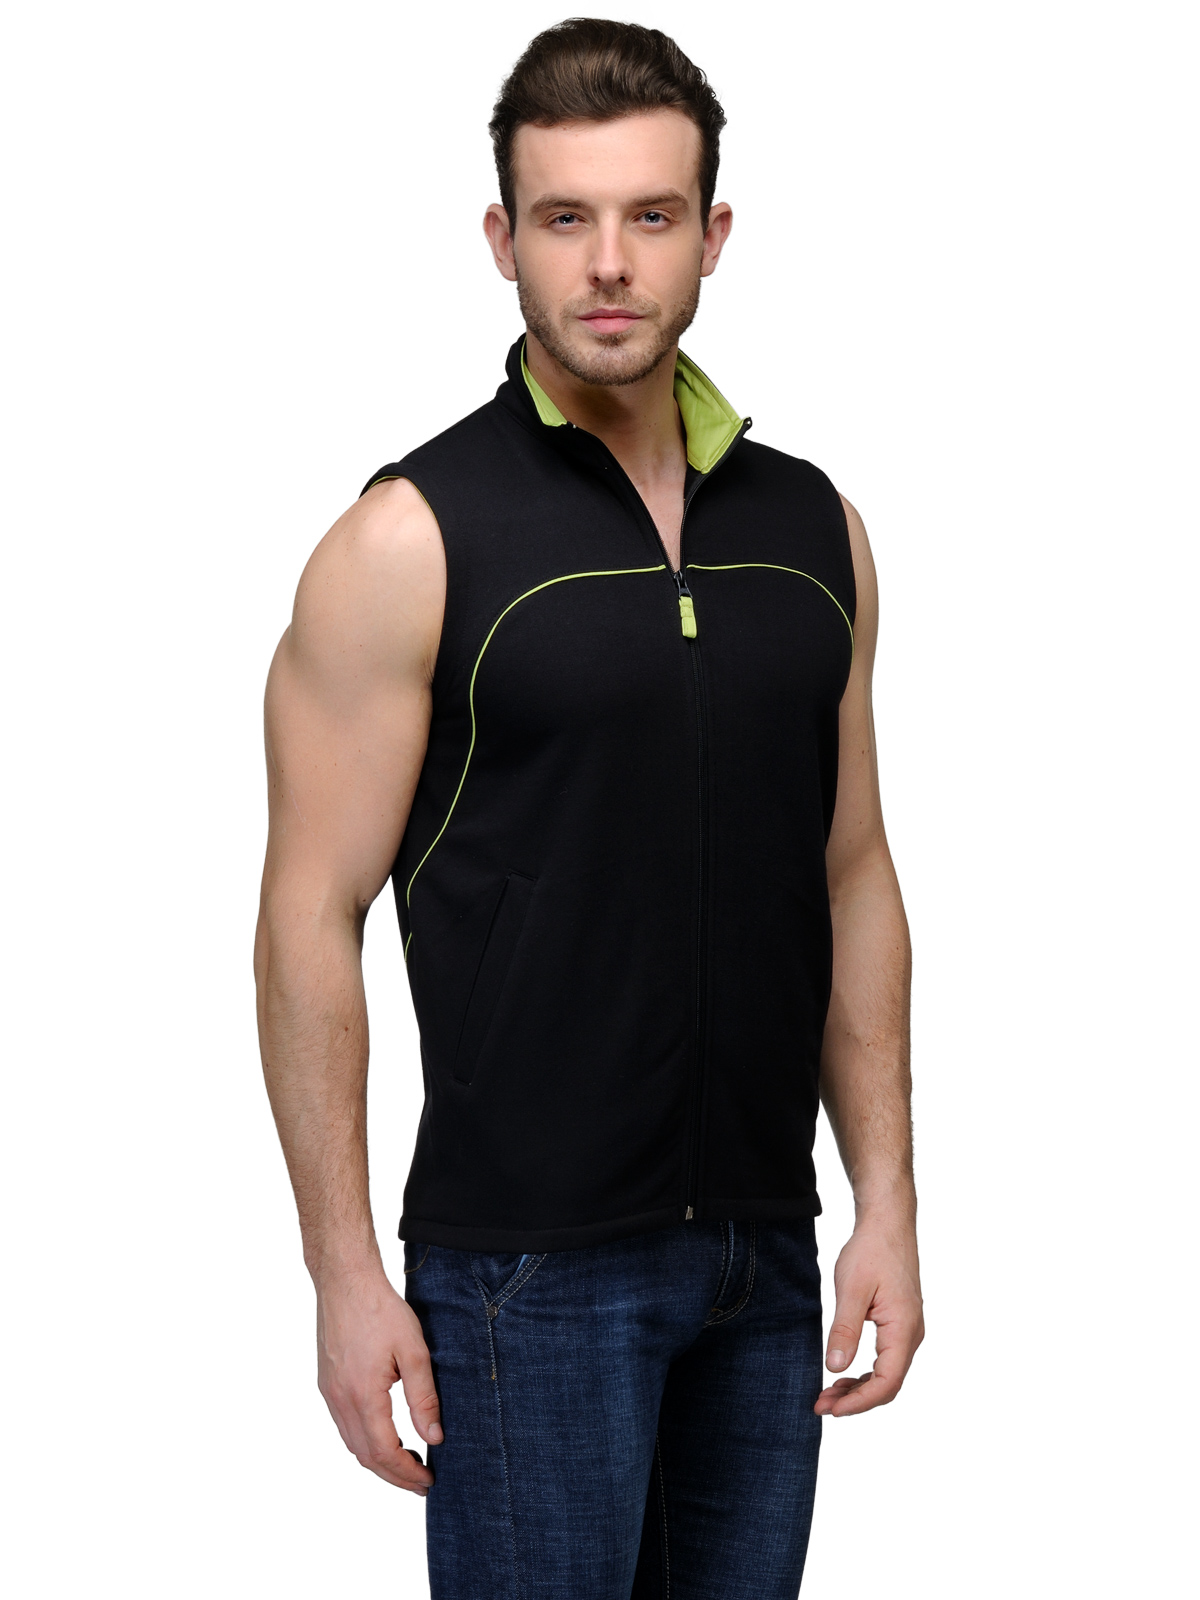 Buy Scott Men's Premium Cotton Sleeveless Jacket - Black Online @ ₹699 ...